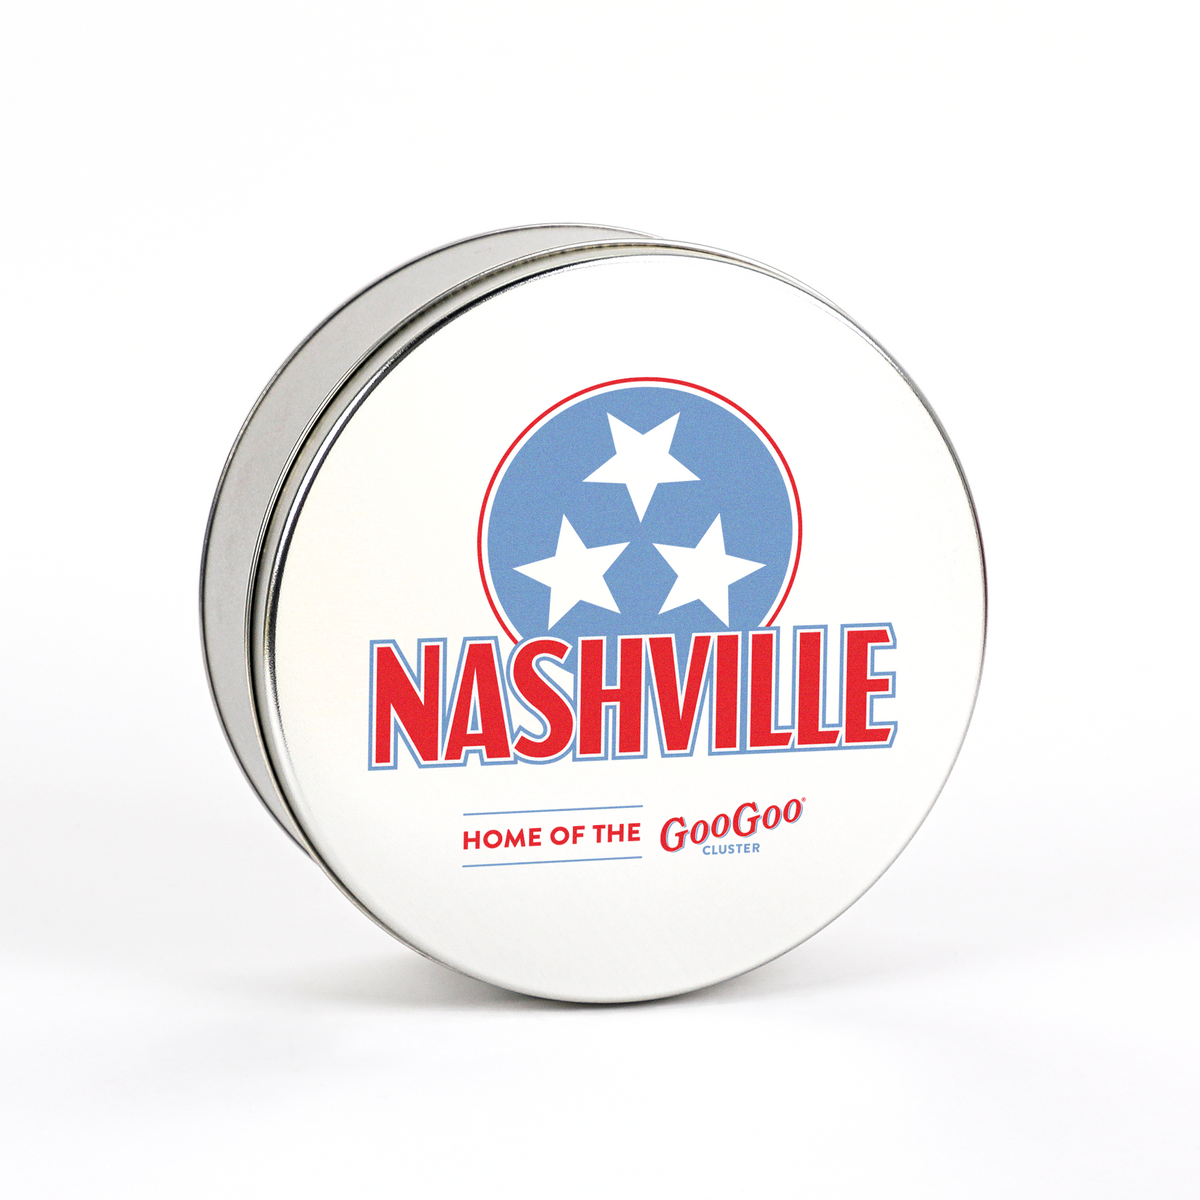 Nashville Silver Gift Tin - 18 count Variety